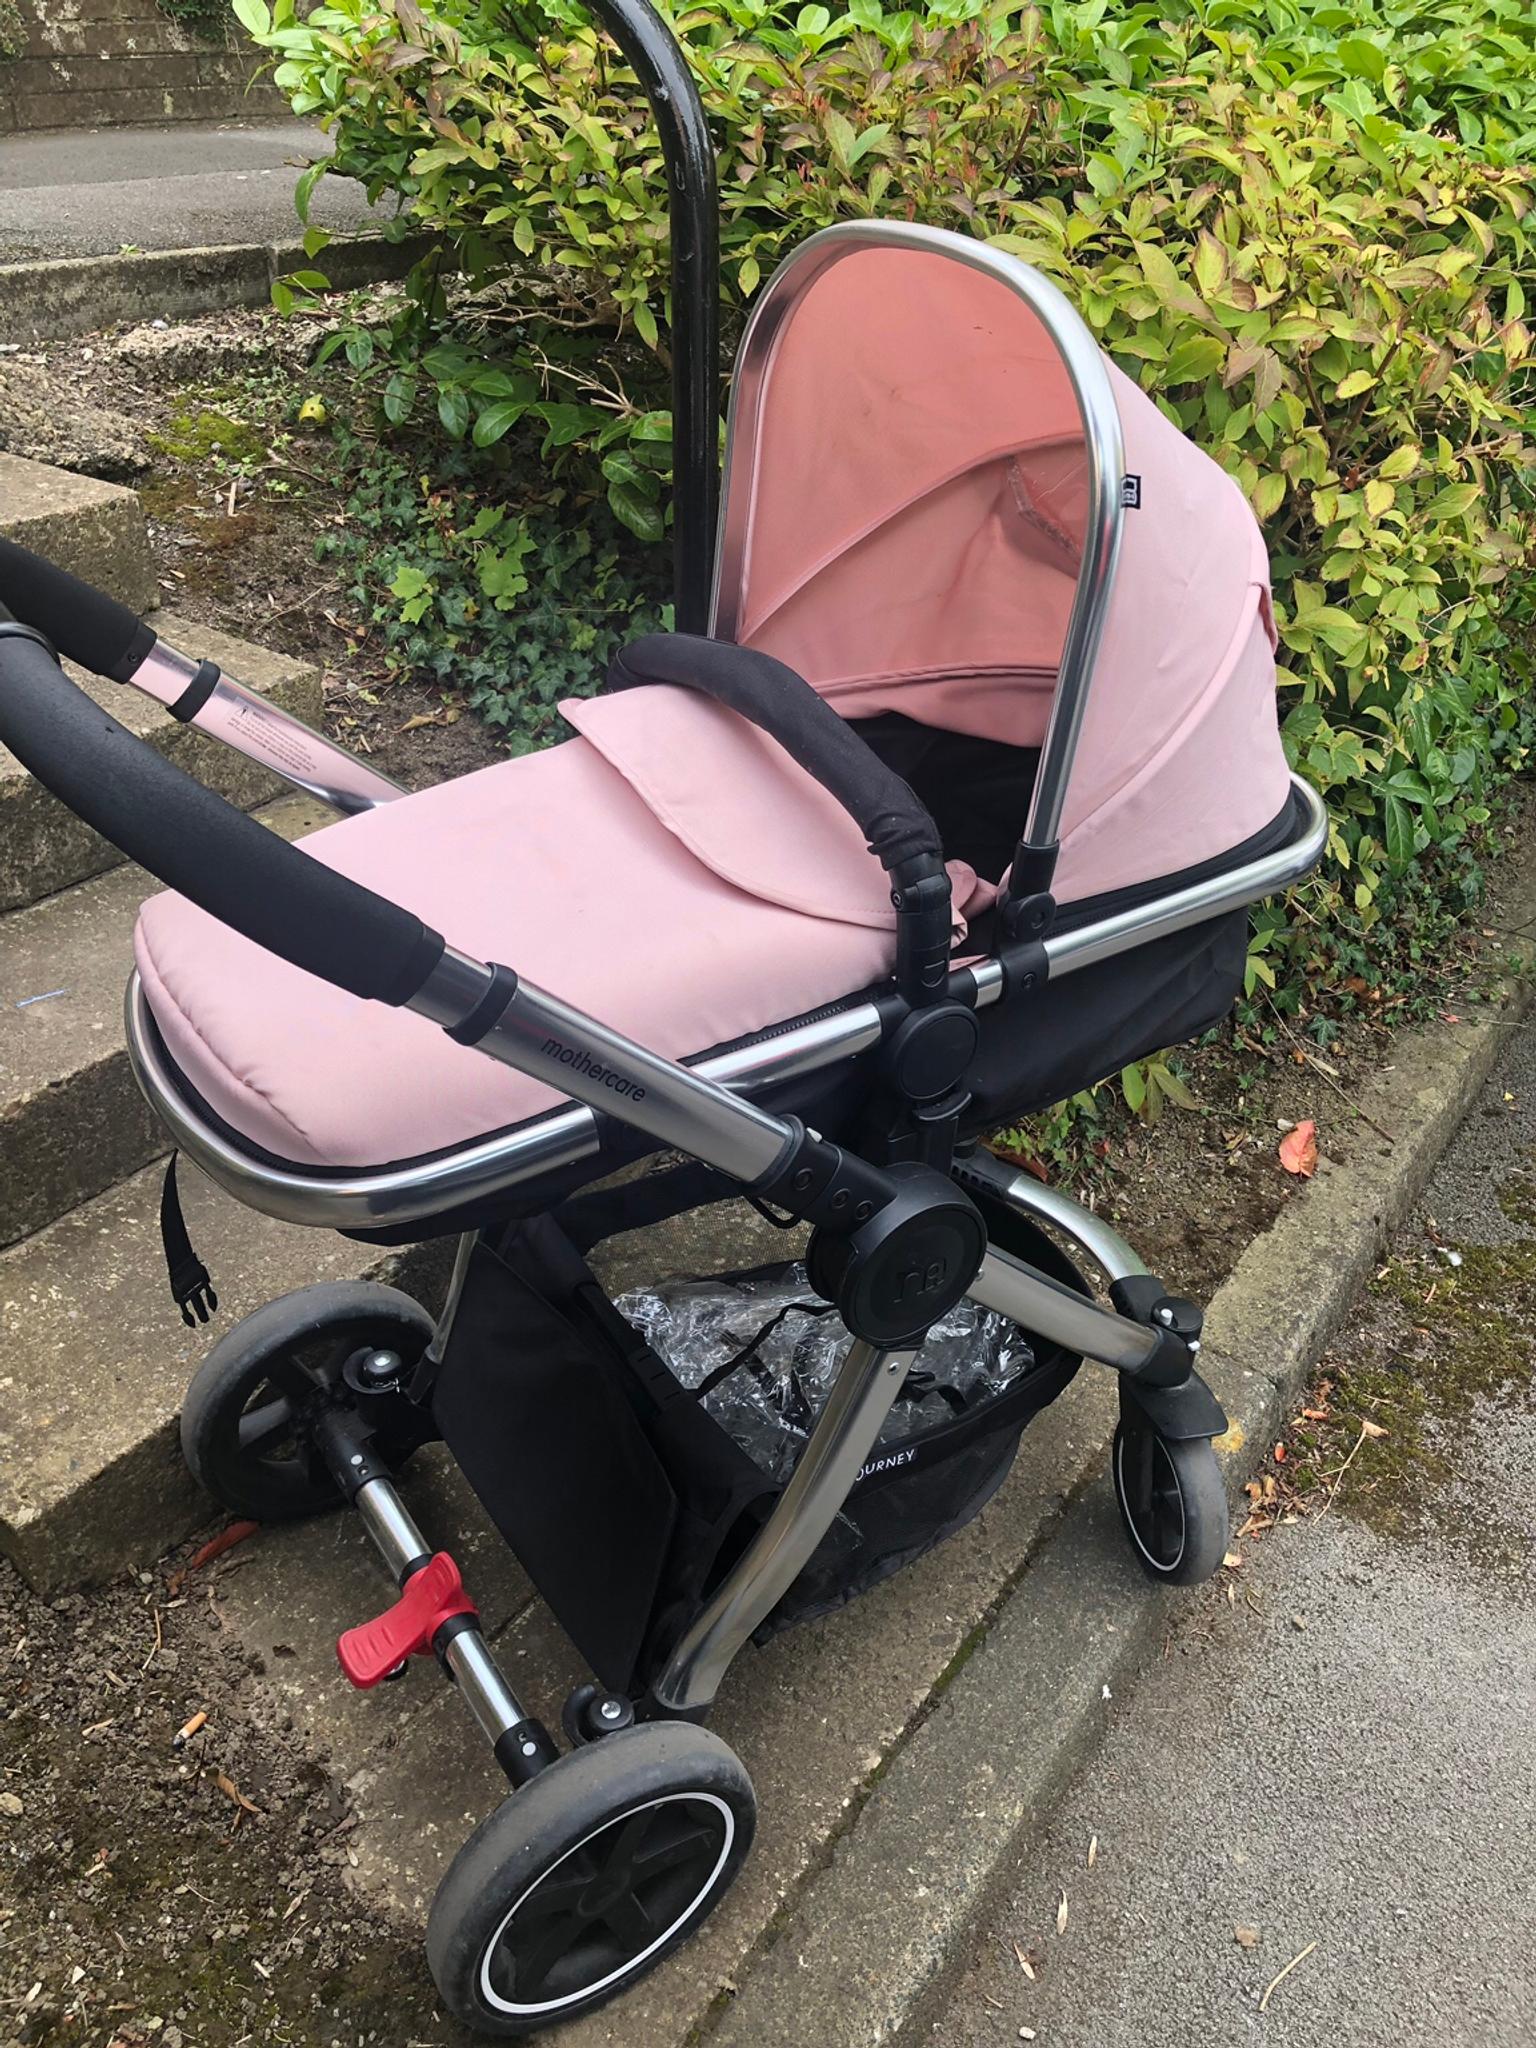 mothercare 4 wheel journey blush